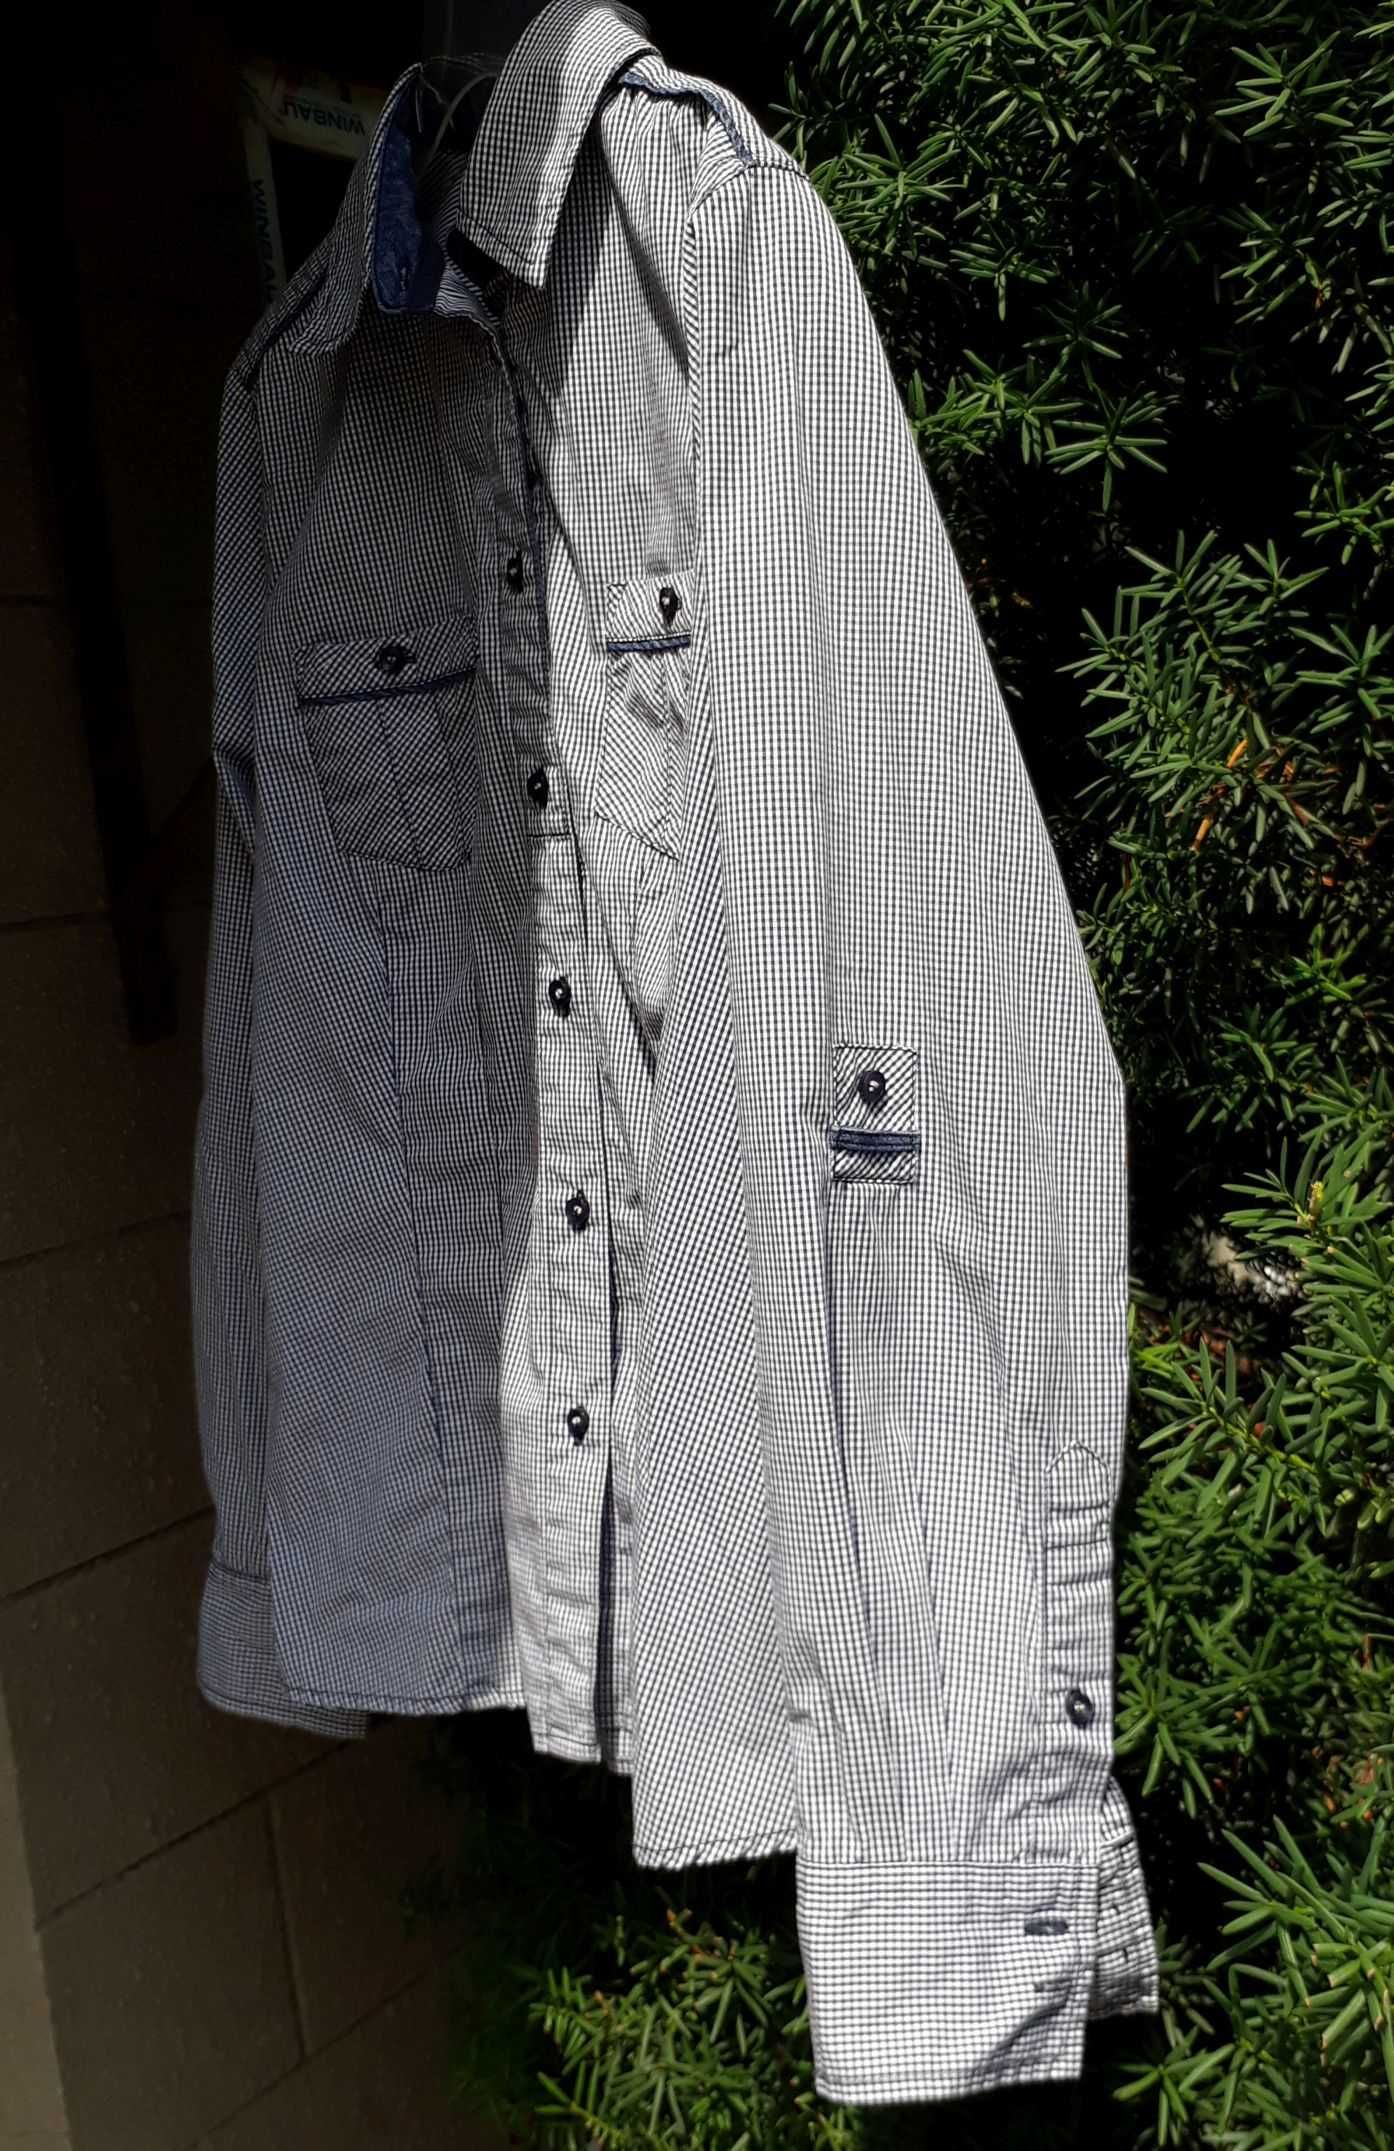 Cтильная женская рубашка Kingfield Charles Vögele  р.40 стрейч-ткань